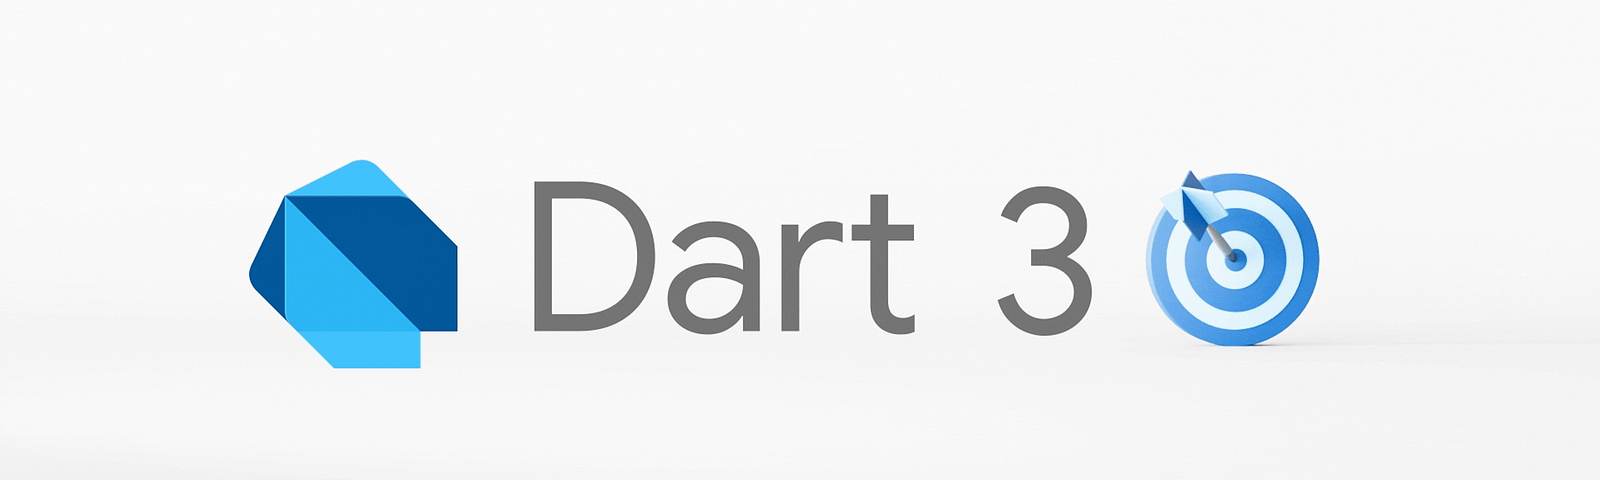 Announcing Dart 3. 100% sound null safety. | by Michael | Dart | Medium